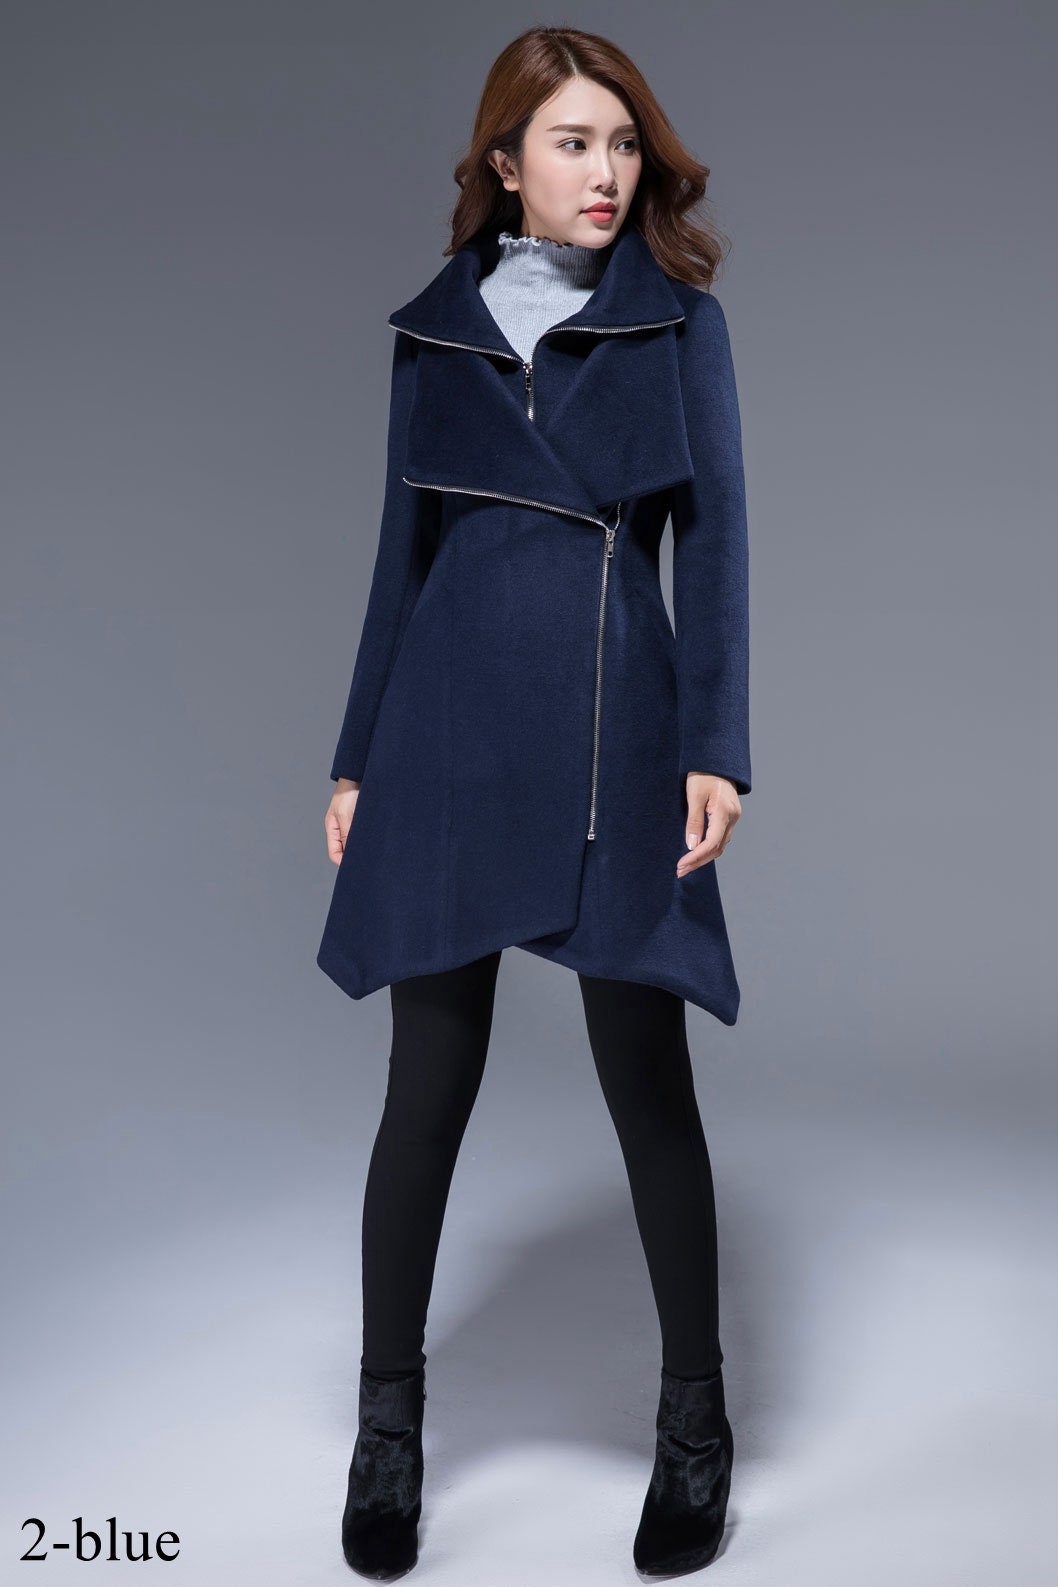 Women's Black Asymmetrical Wool Coat and Jackets Modern | Etsy